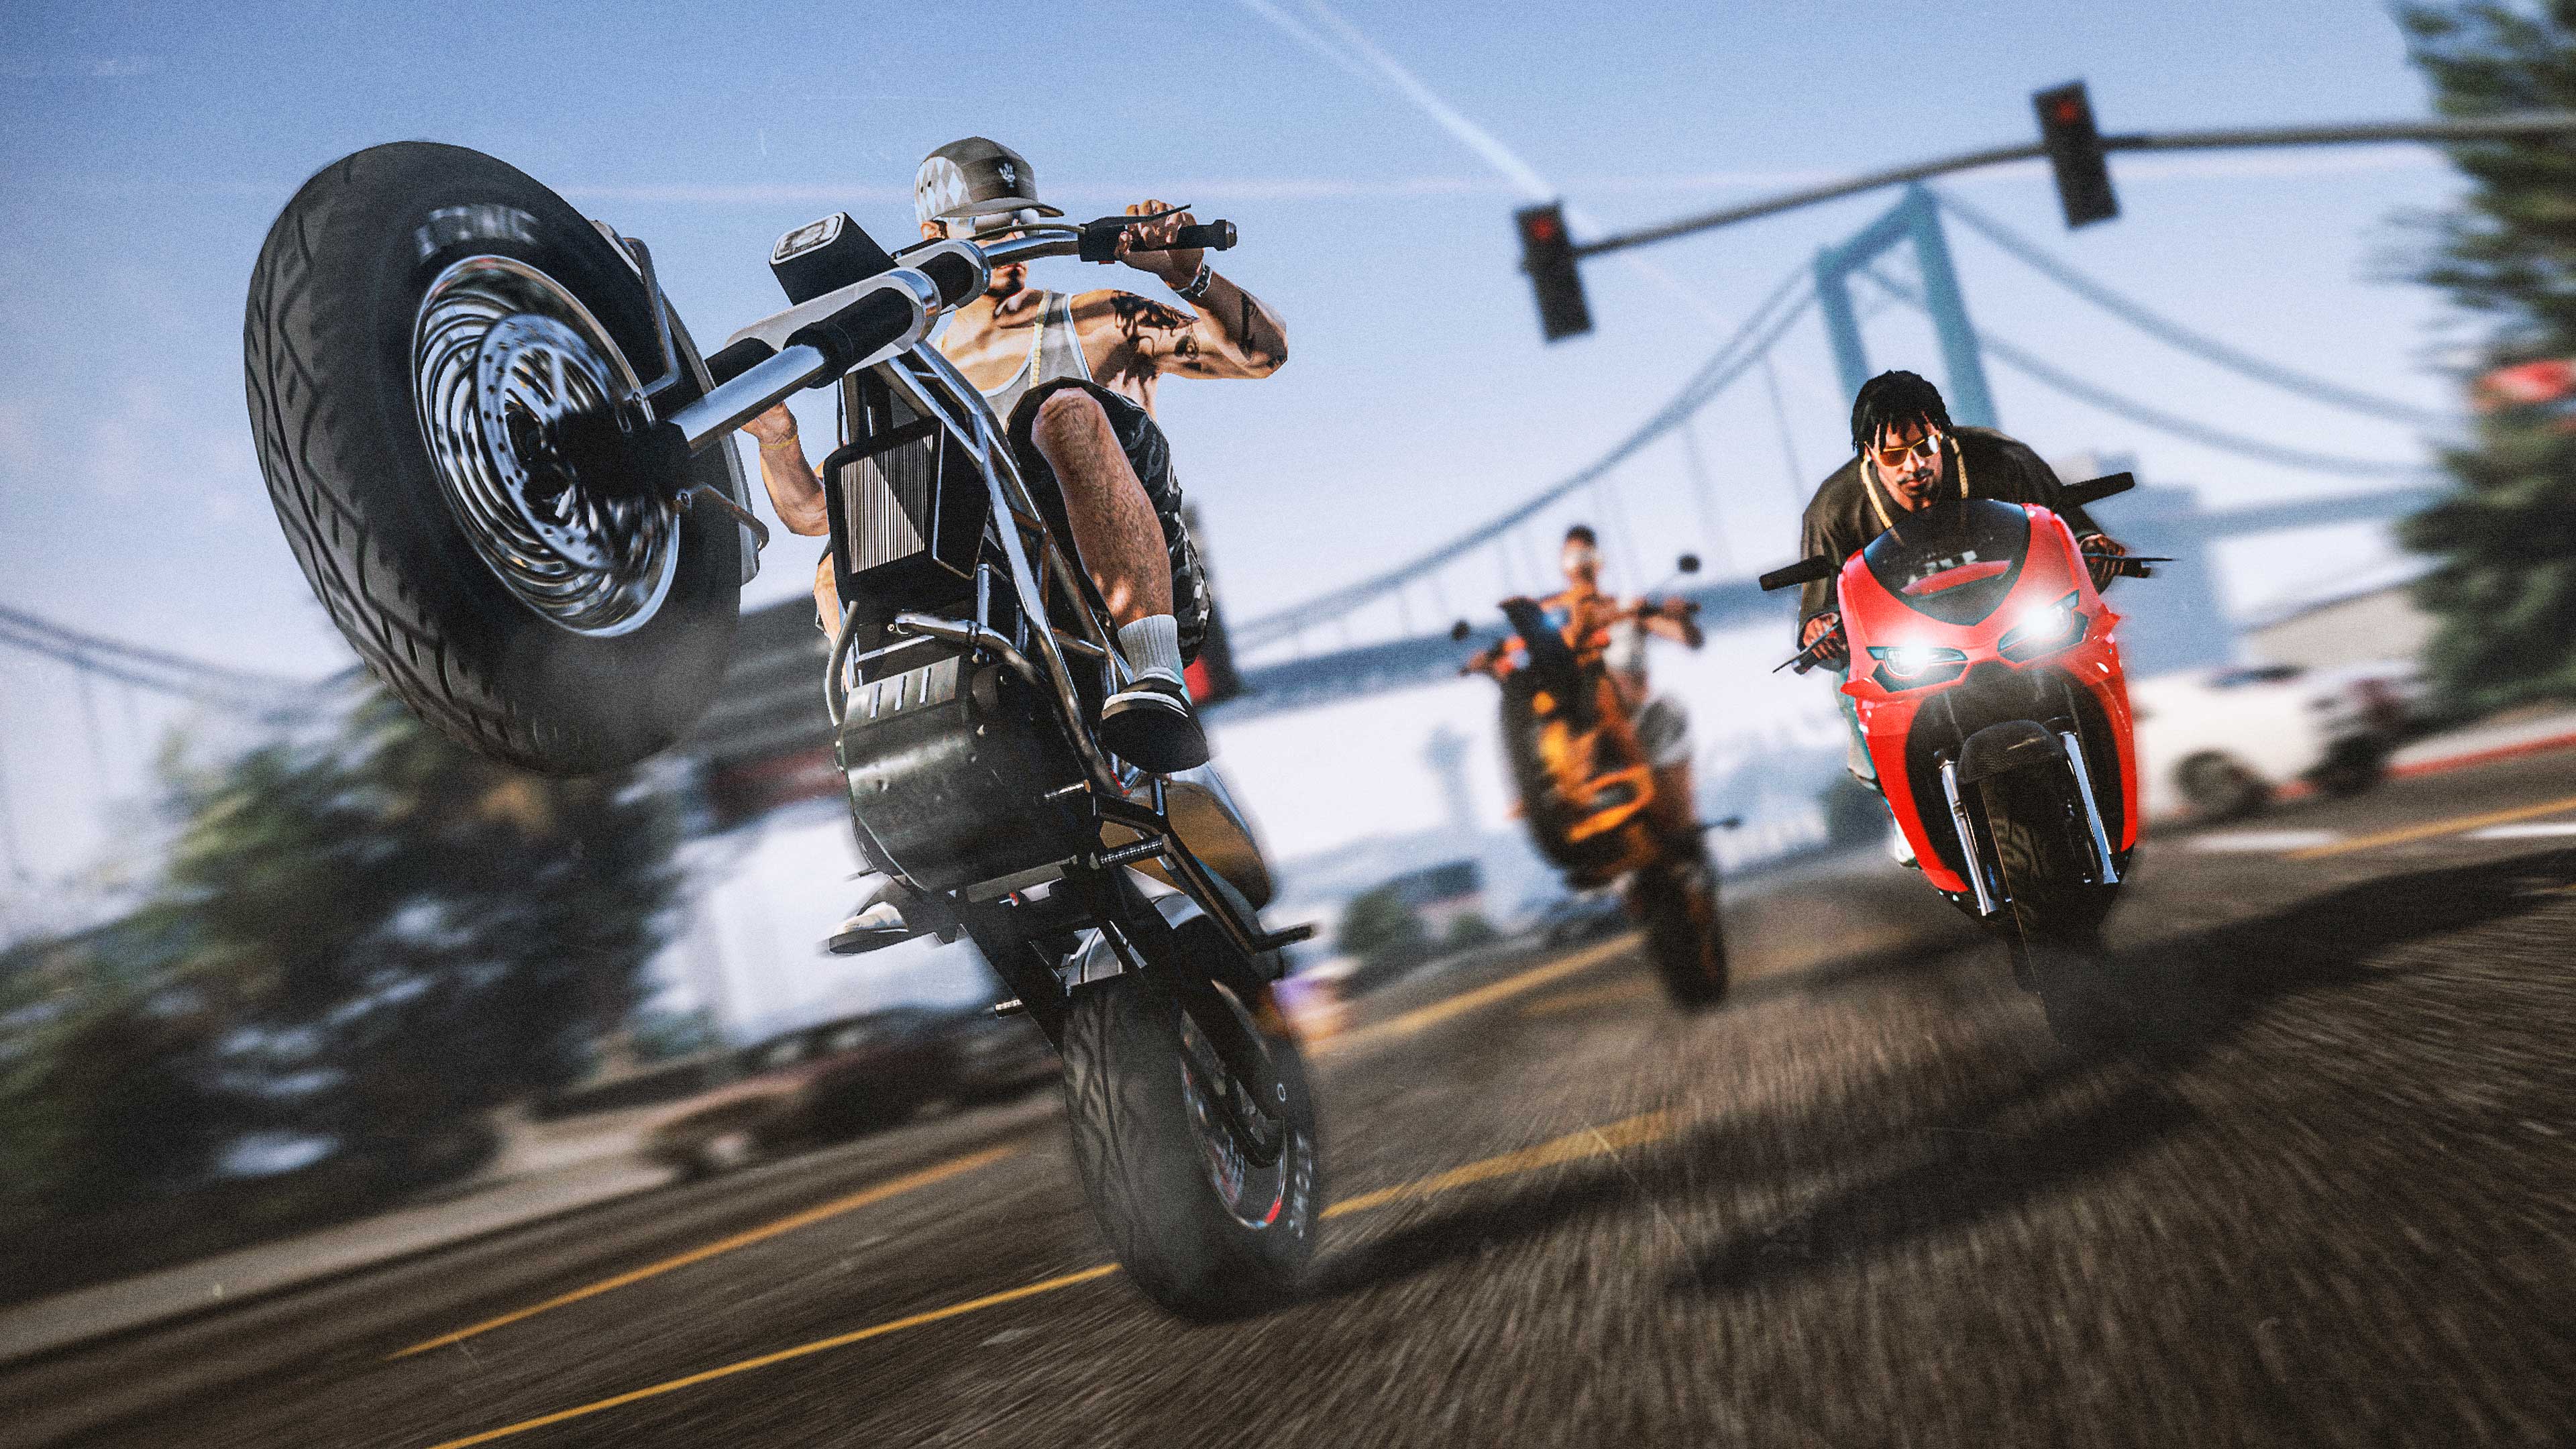 Bikers Rule the Road this Week as Business Booms - Rockstar Games